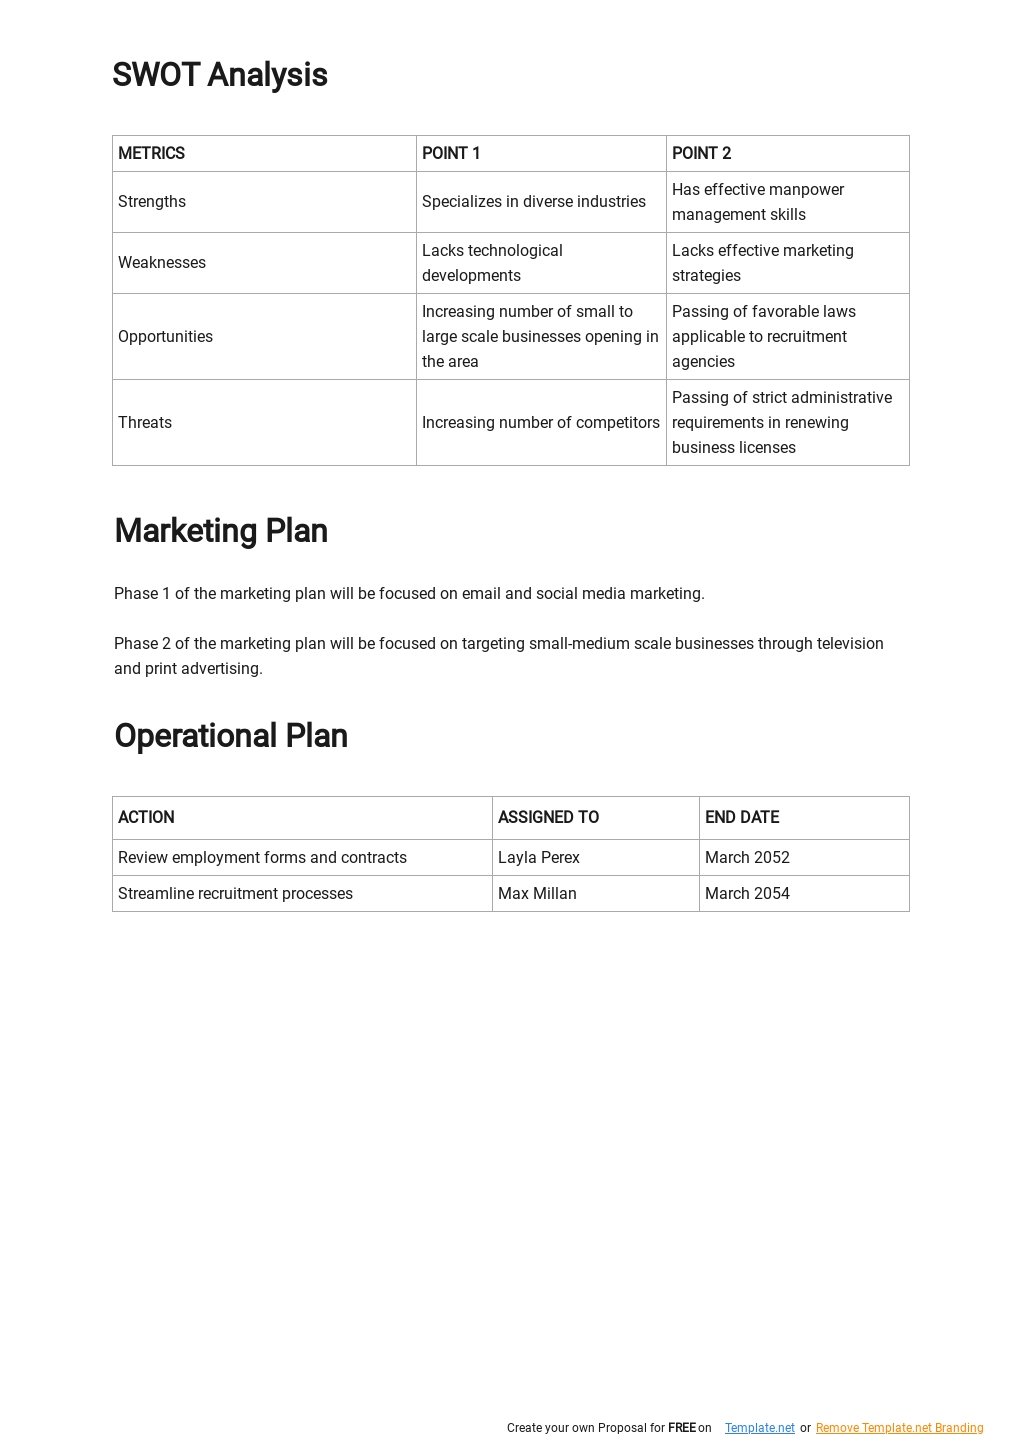 5 Year Strategic Business Plan Template [Free PDF] - Google Docs, Word